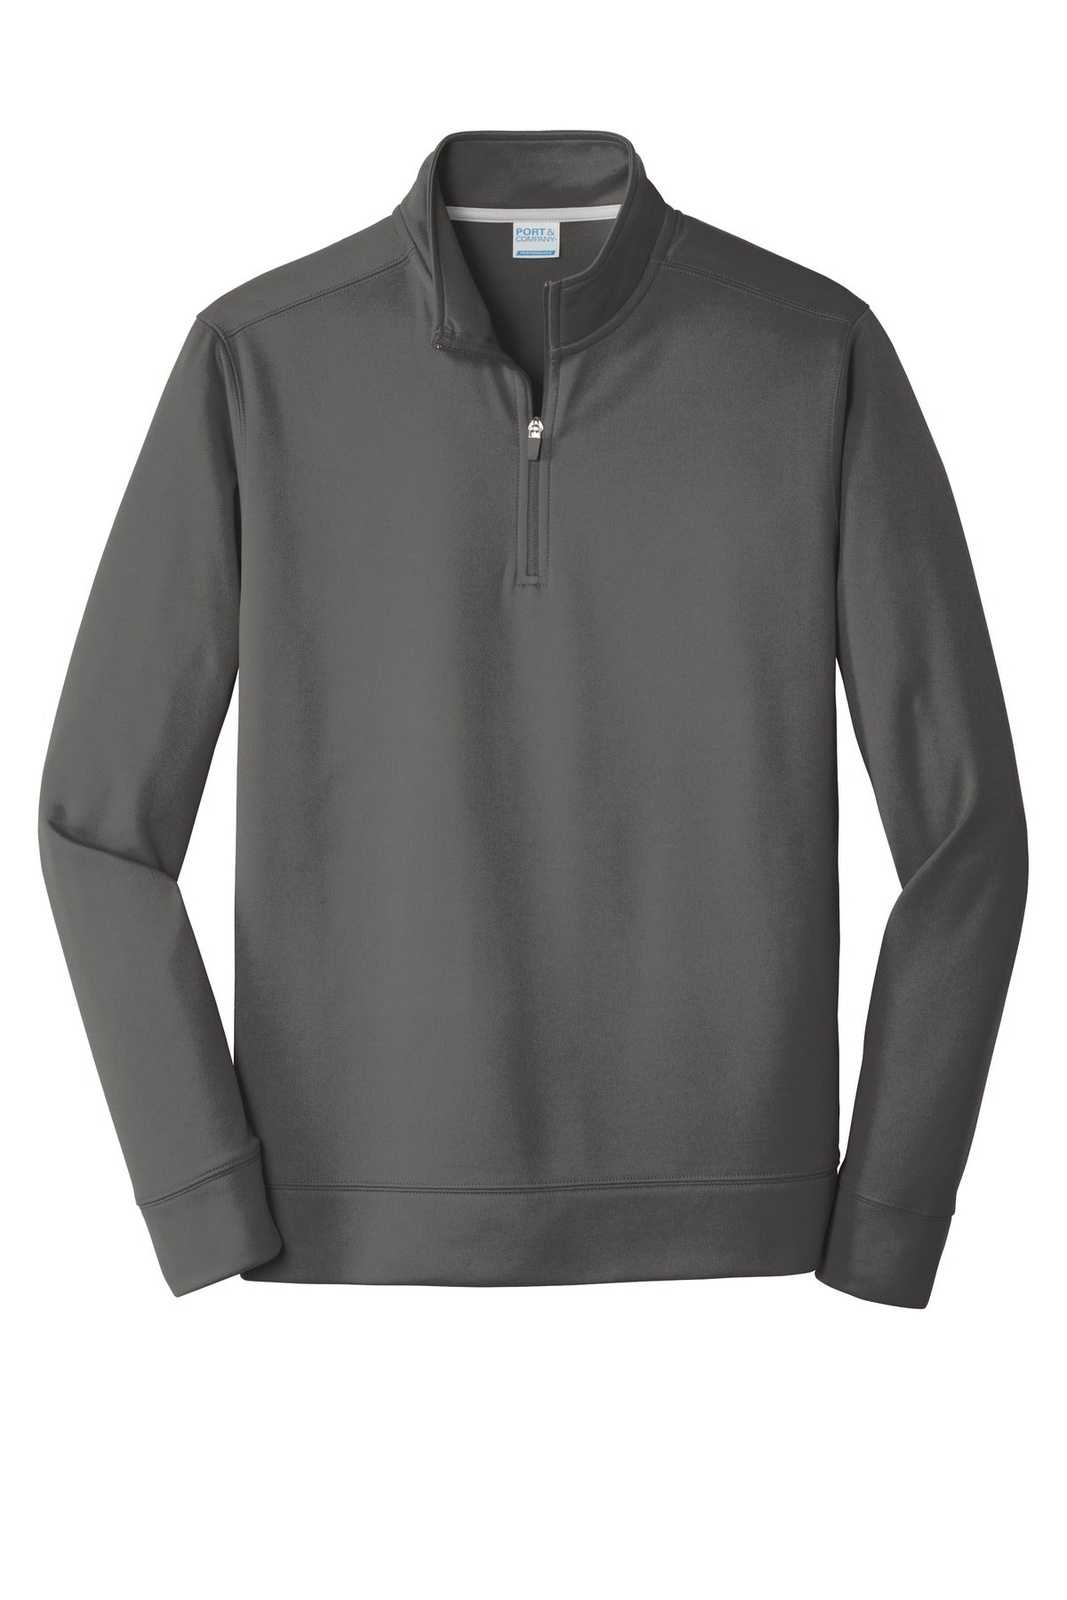 Port &amp; Company PC590Q Fleece 1/4-Zip Pullover Sweatshirt - Charcoal - HIT a Double - 5